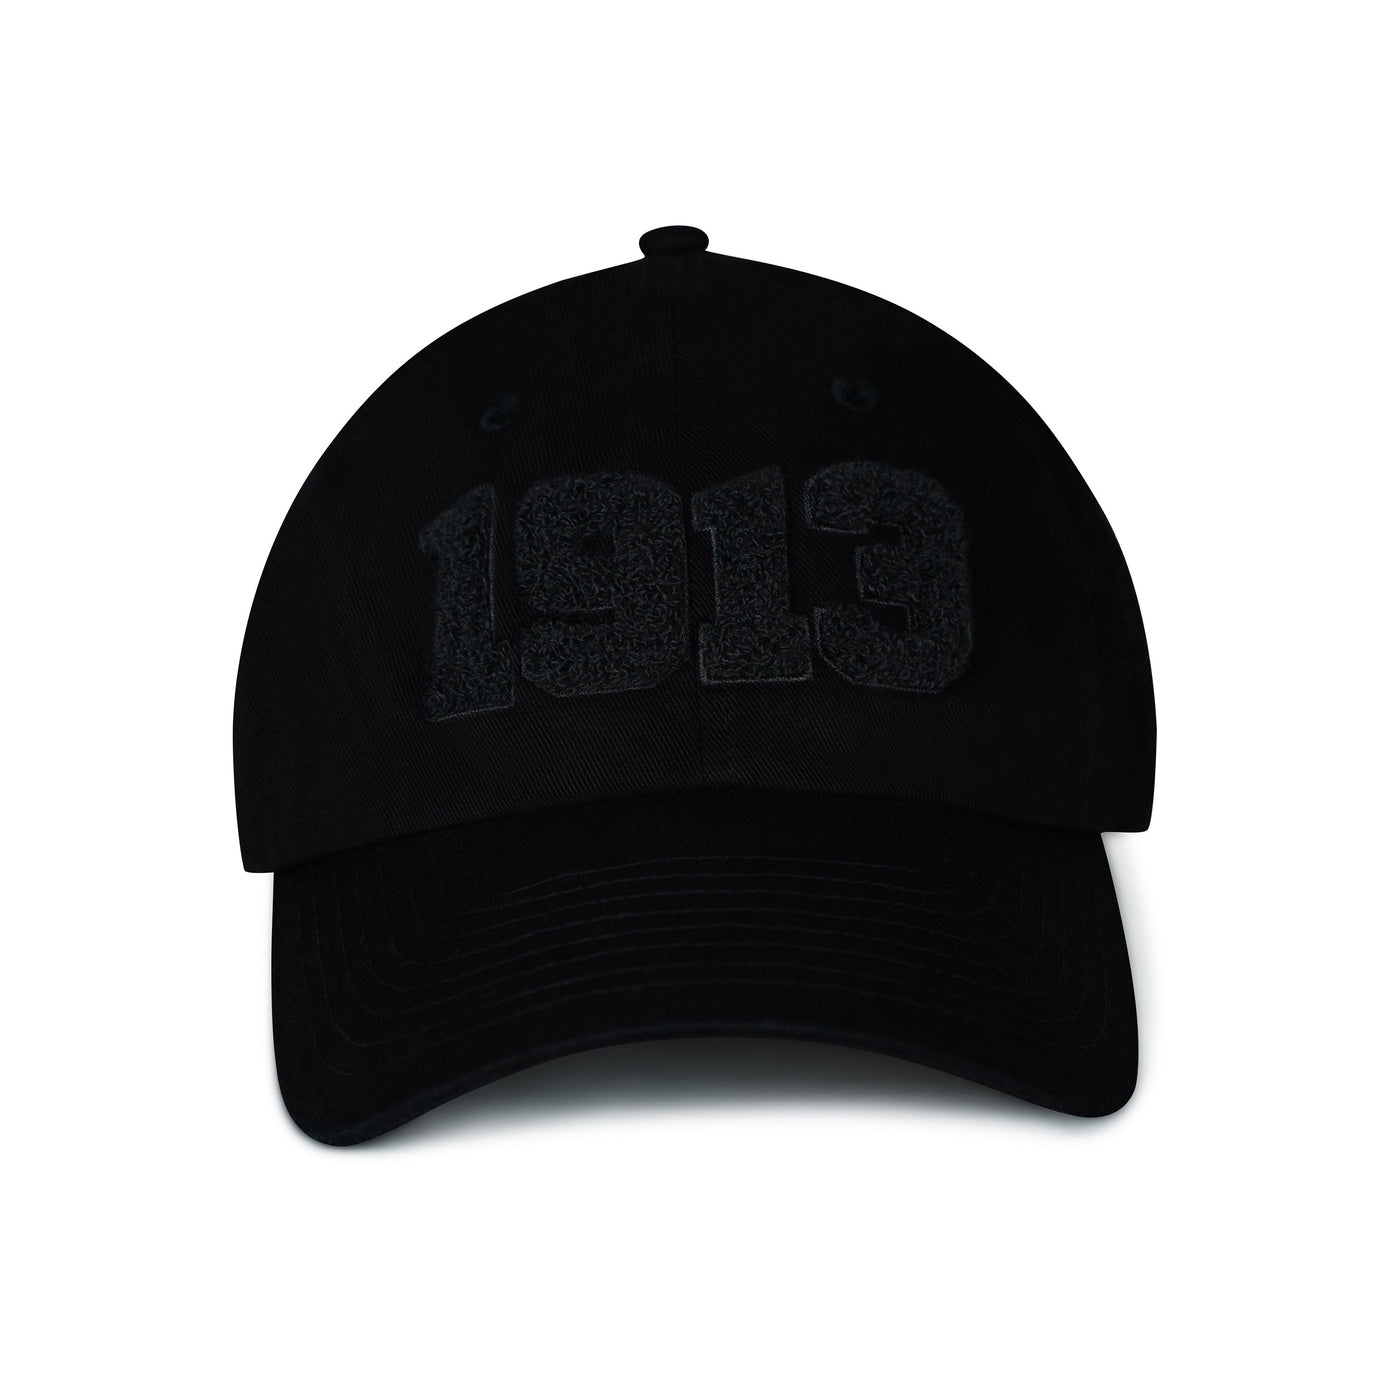 All Black 1913 Cap